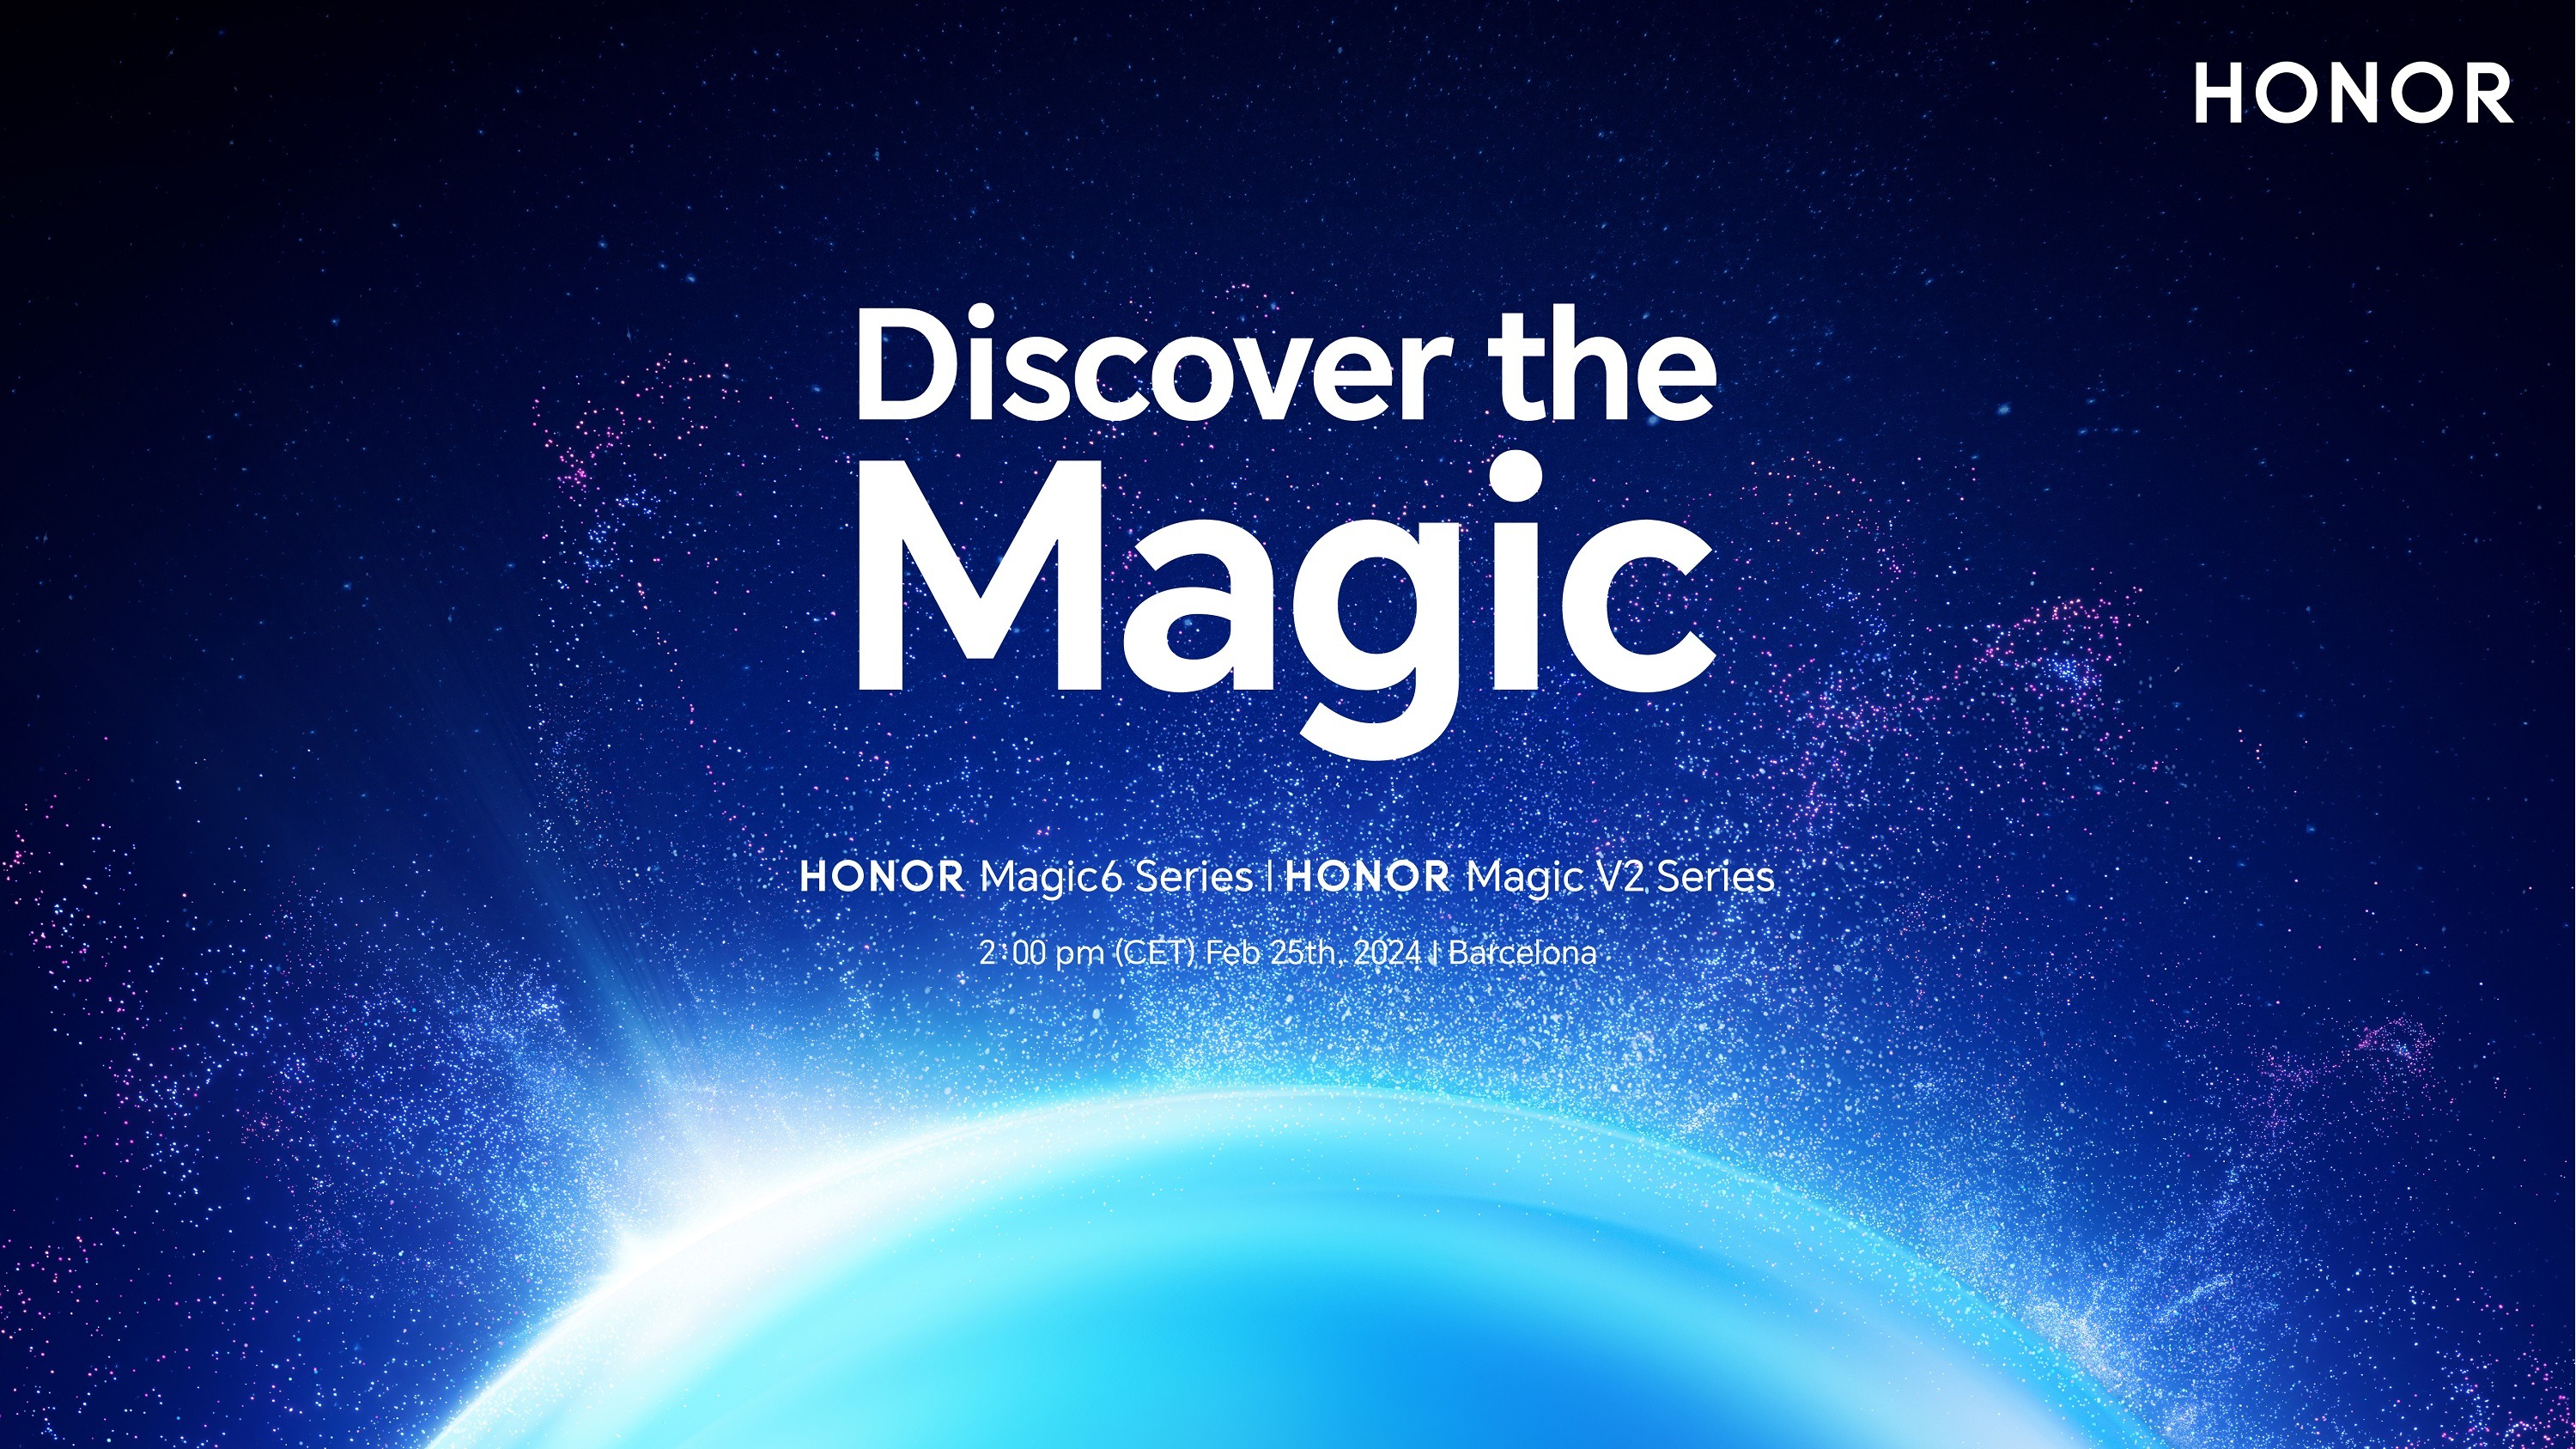 Magic Honor MWC 2024 etkinliğini keşfedin.